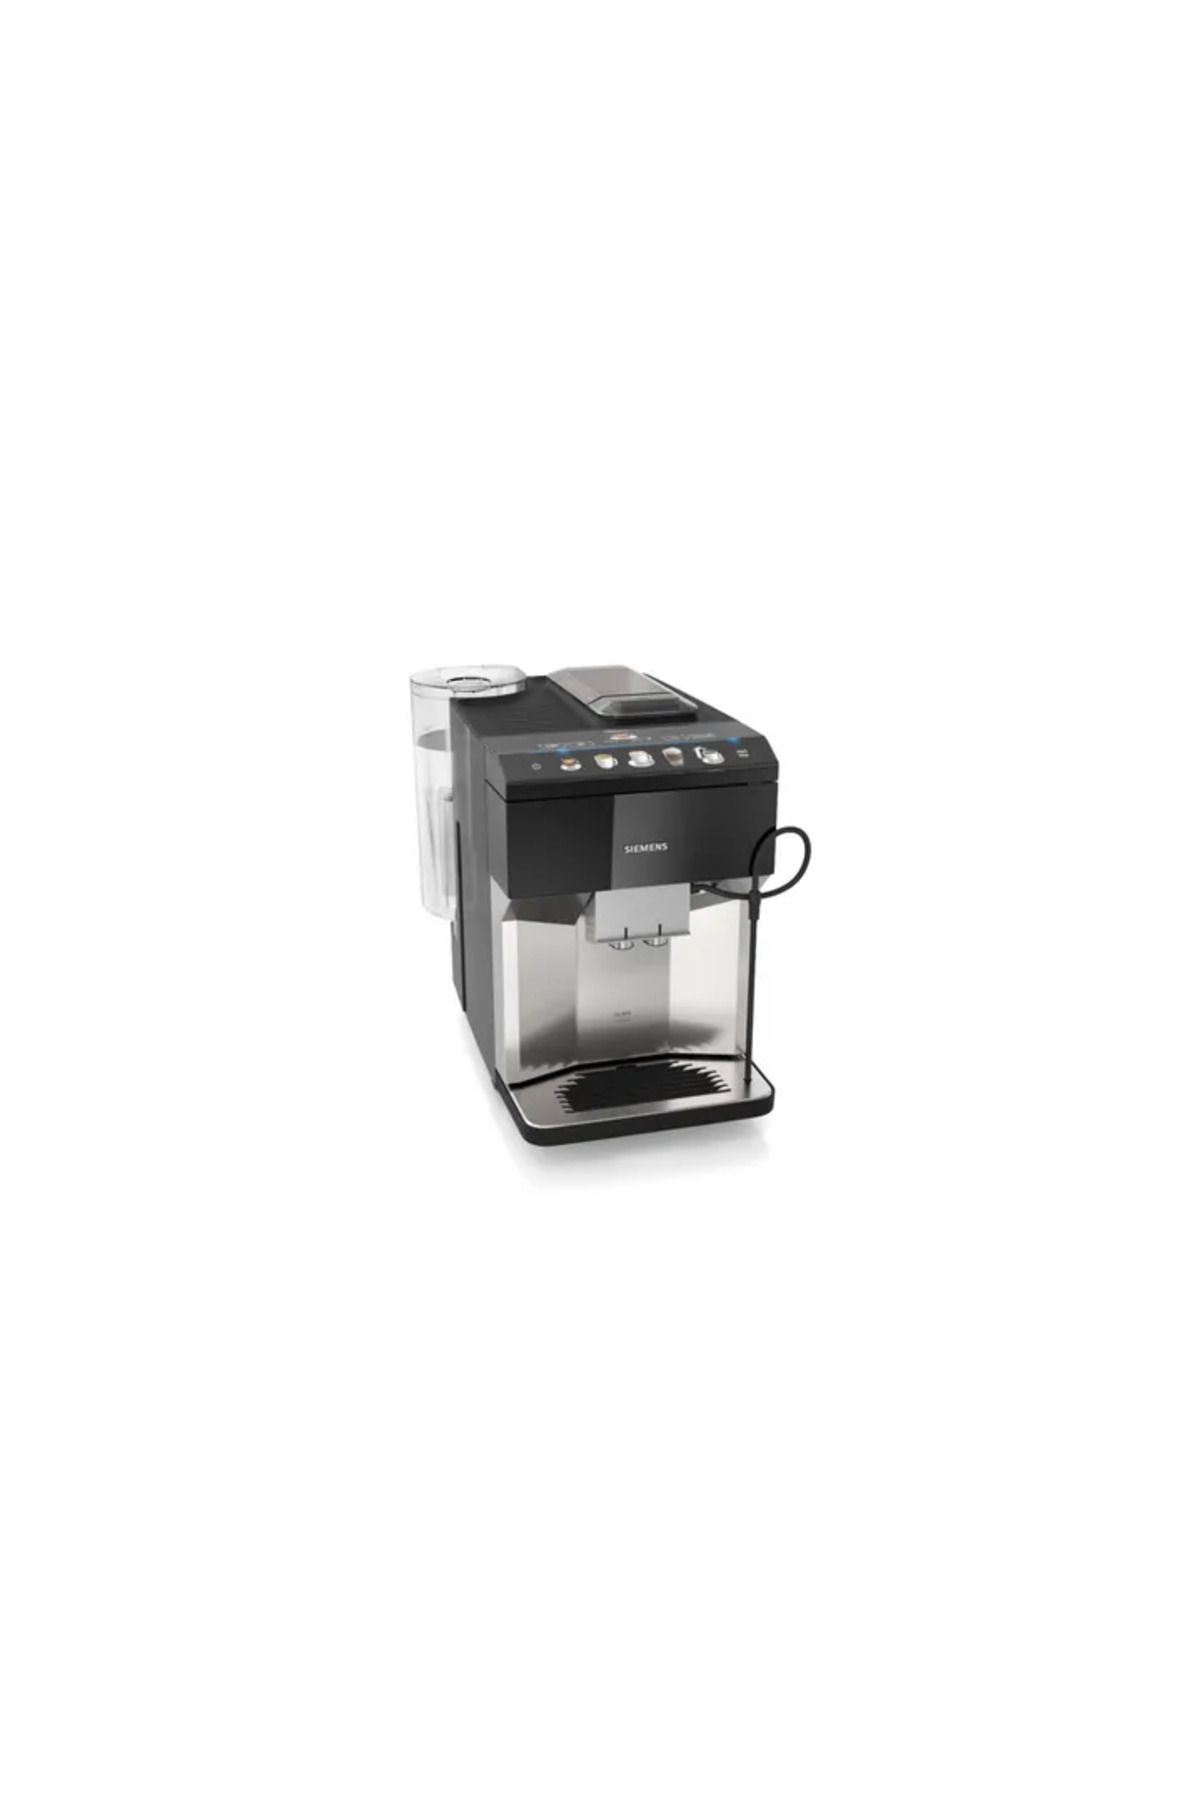 Siemens Tp505r01 Tam Otomatik Kahve Makinesi Inox